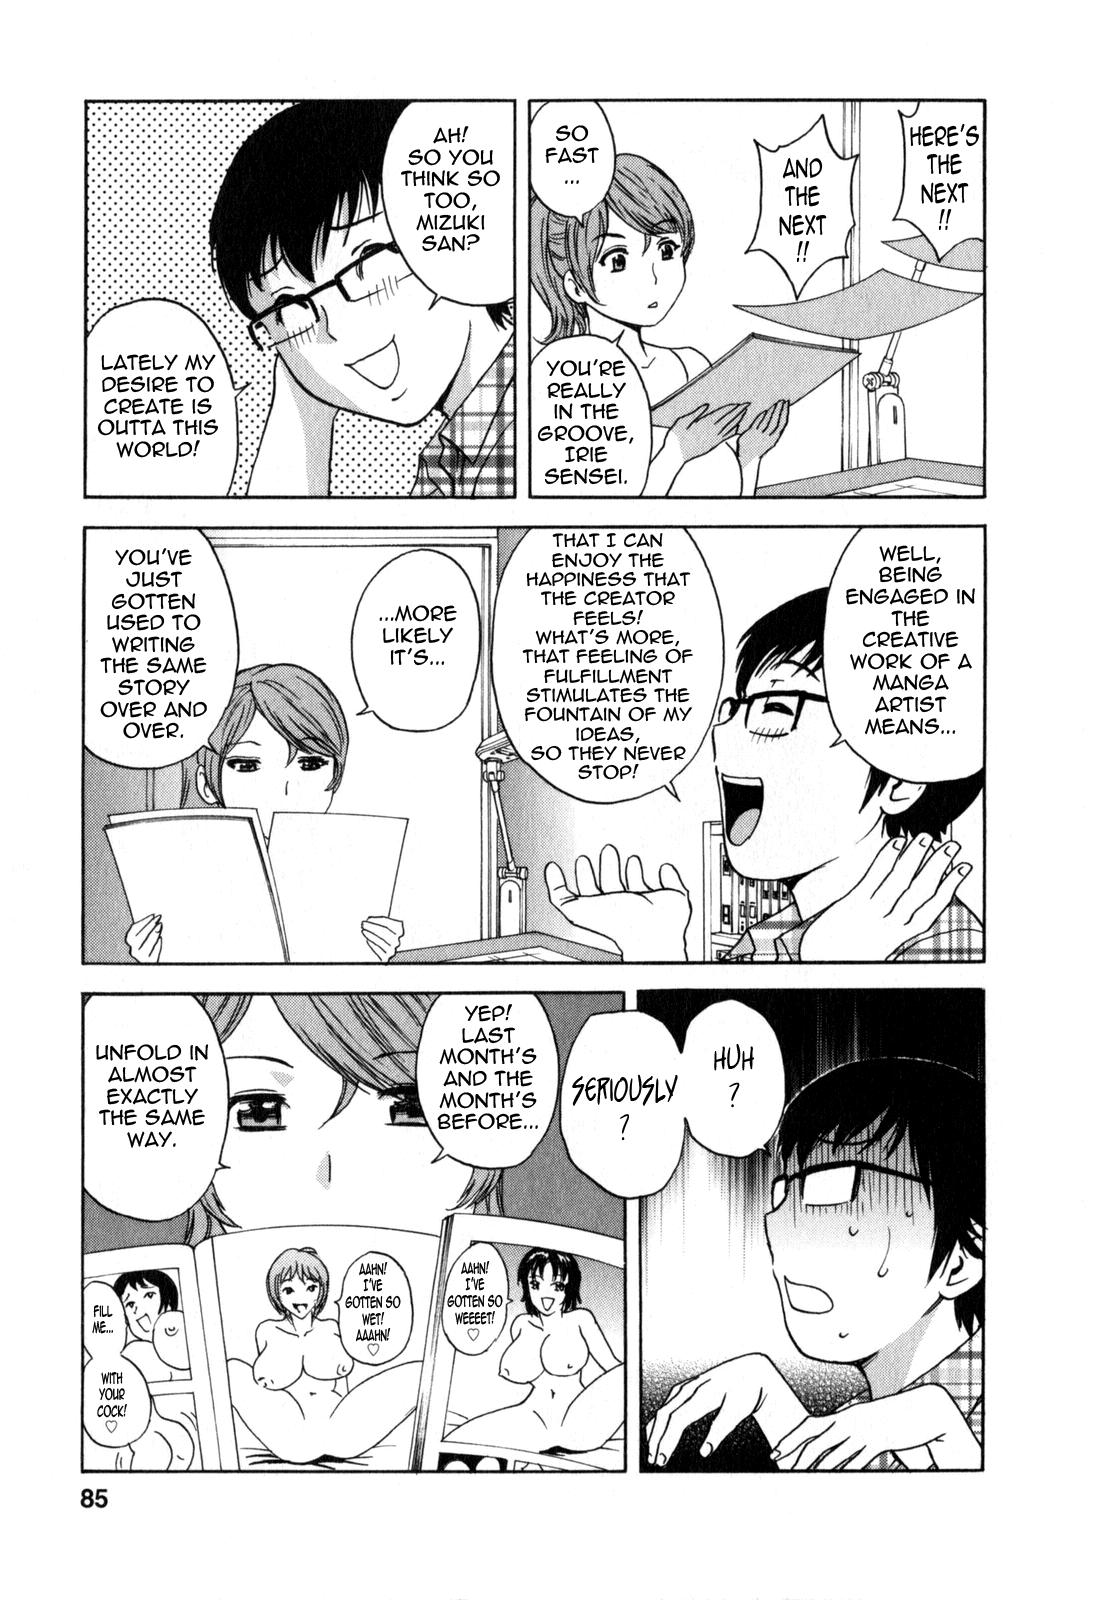 [Hidemaru] Life with Married Women Just Like a Manga 2 - Ch. 1-7 [English] {Tadanohito} 89